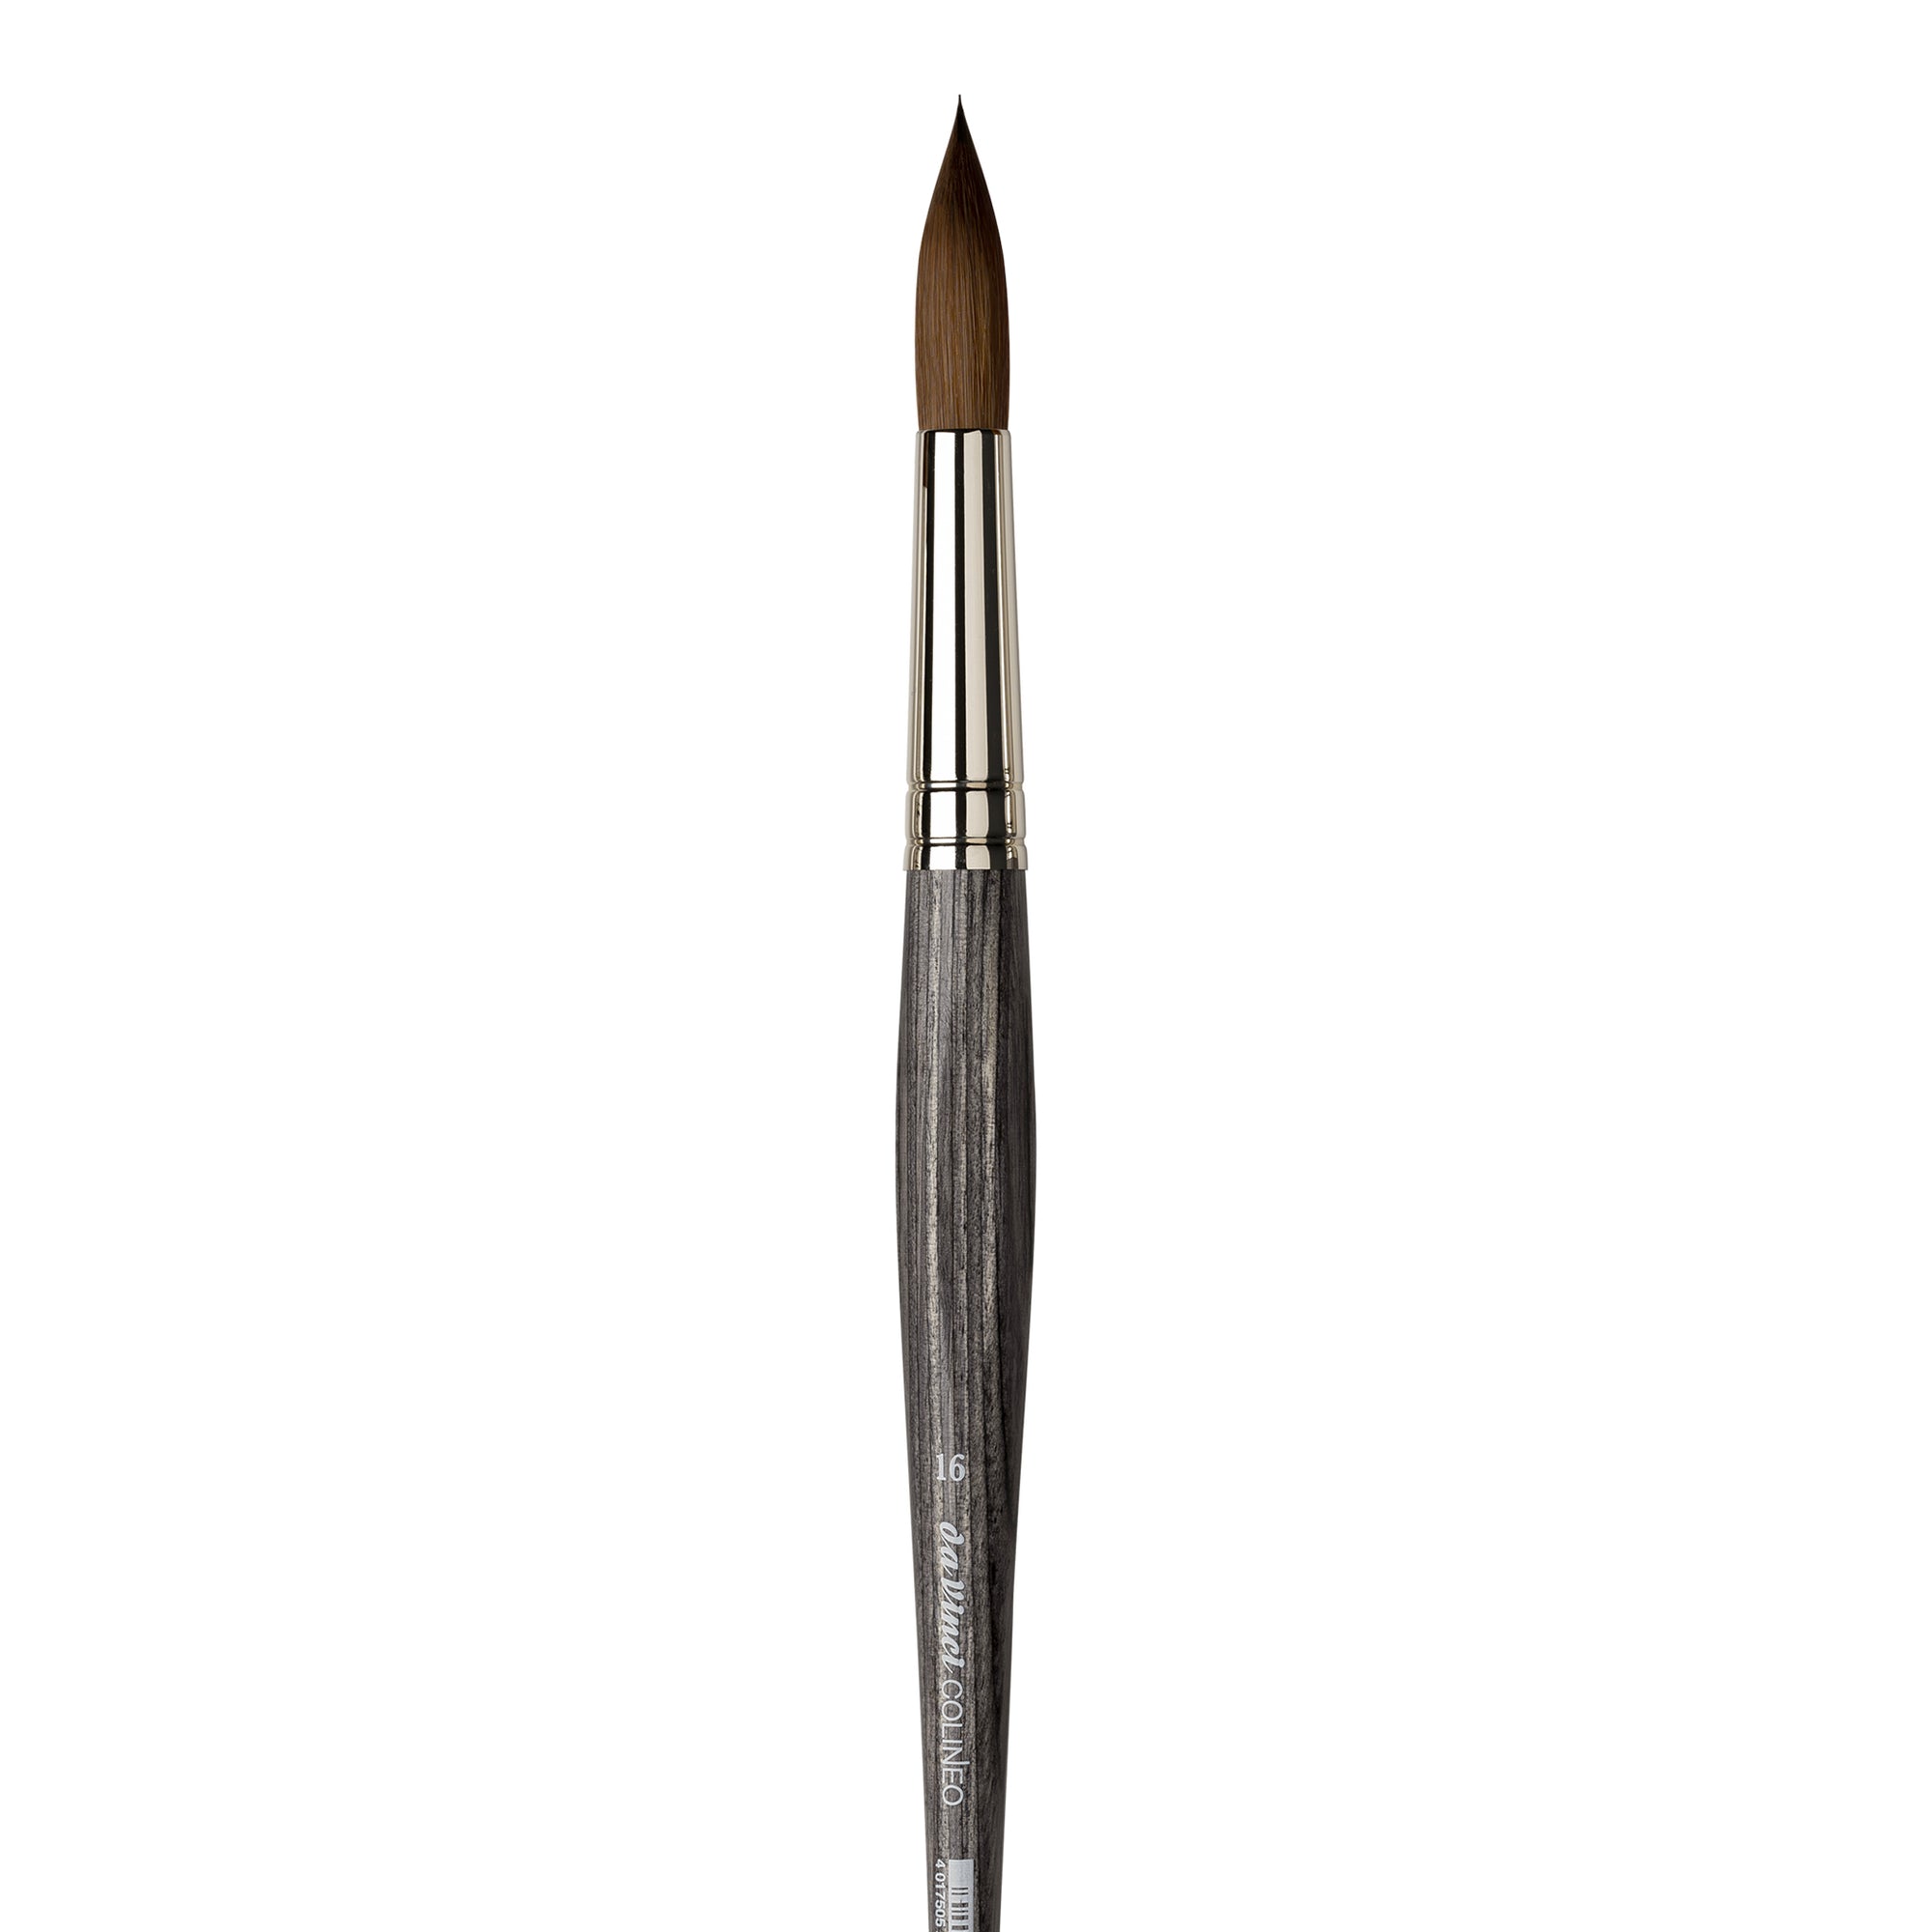 da Vinci COLINEO Synthetic Sable Watercolour Brushes